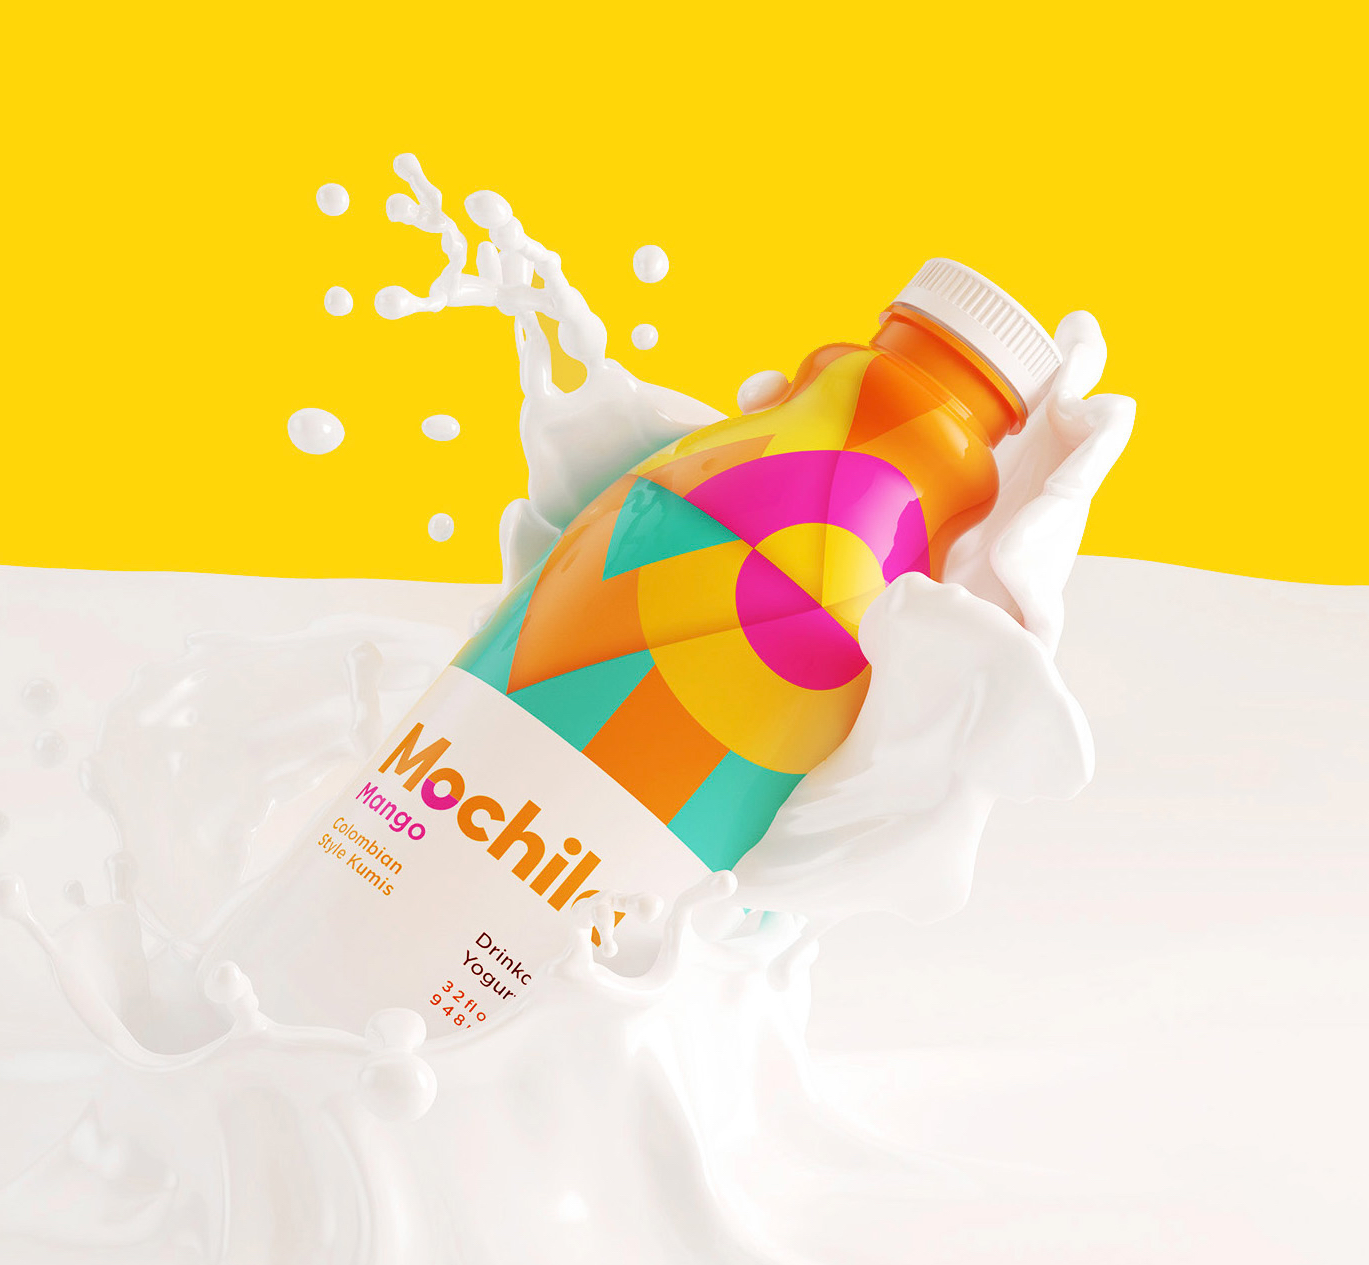 Spontaneous Yogurt Brand and Packaging Design with Real Original Latin Soul